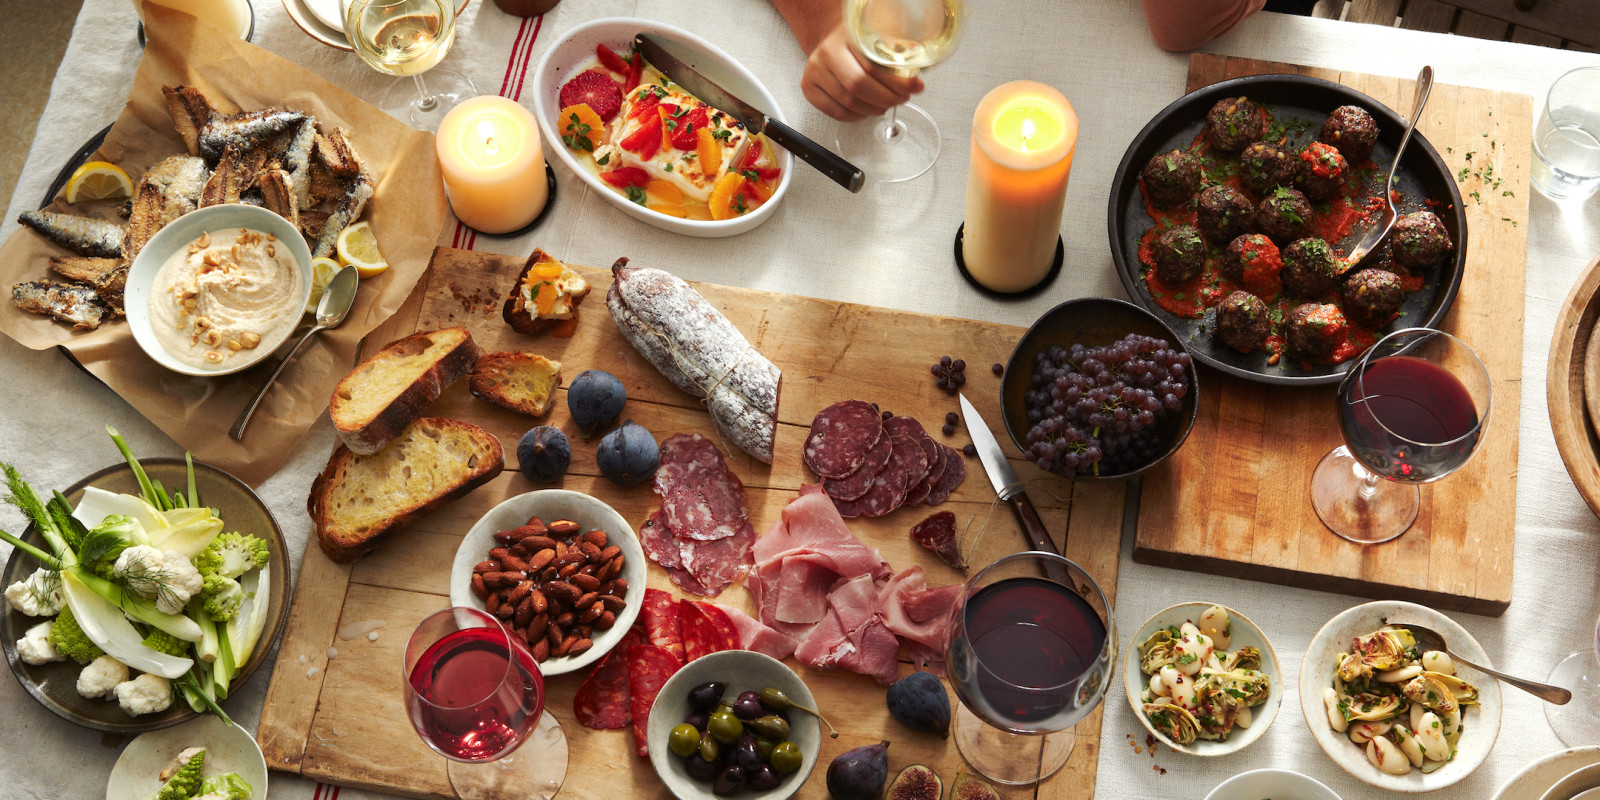 Italian Dinner Party Ideas
 How to Host an Instagram Worthy Italian Dinner Party